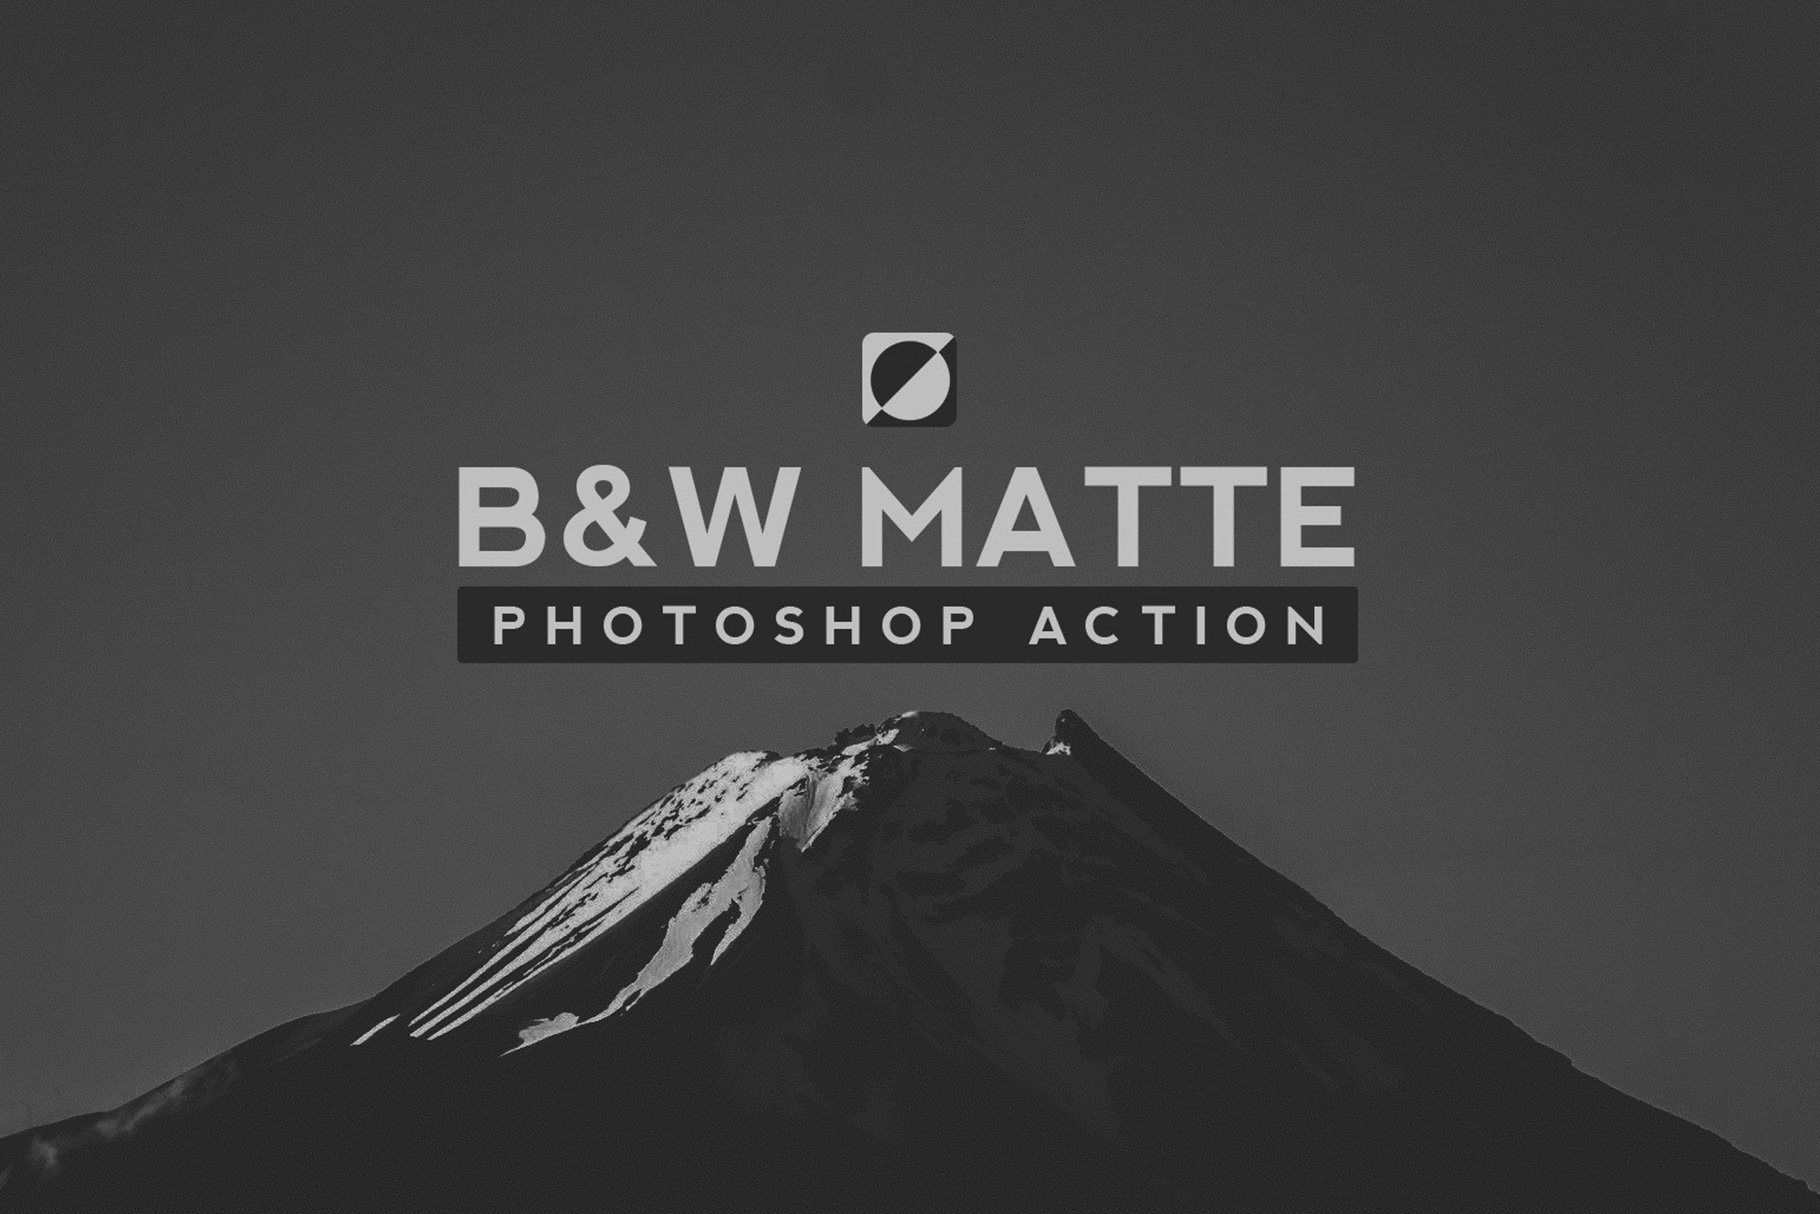 Black & White Matte Photoshop Actioncover image.